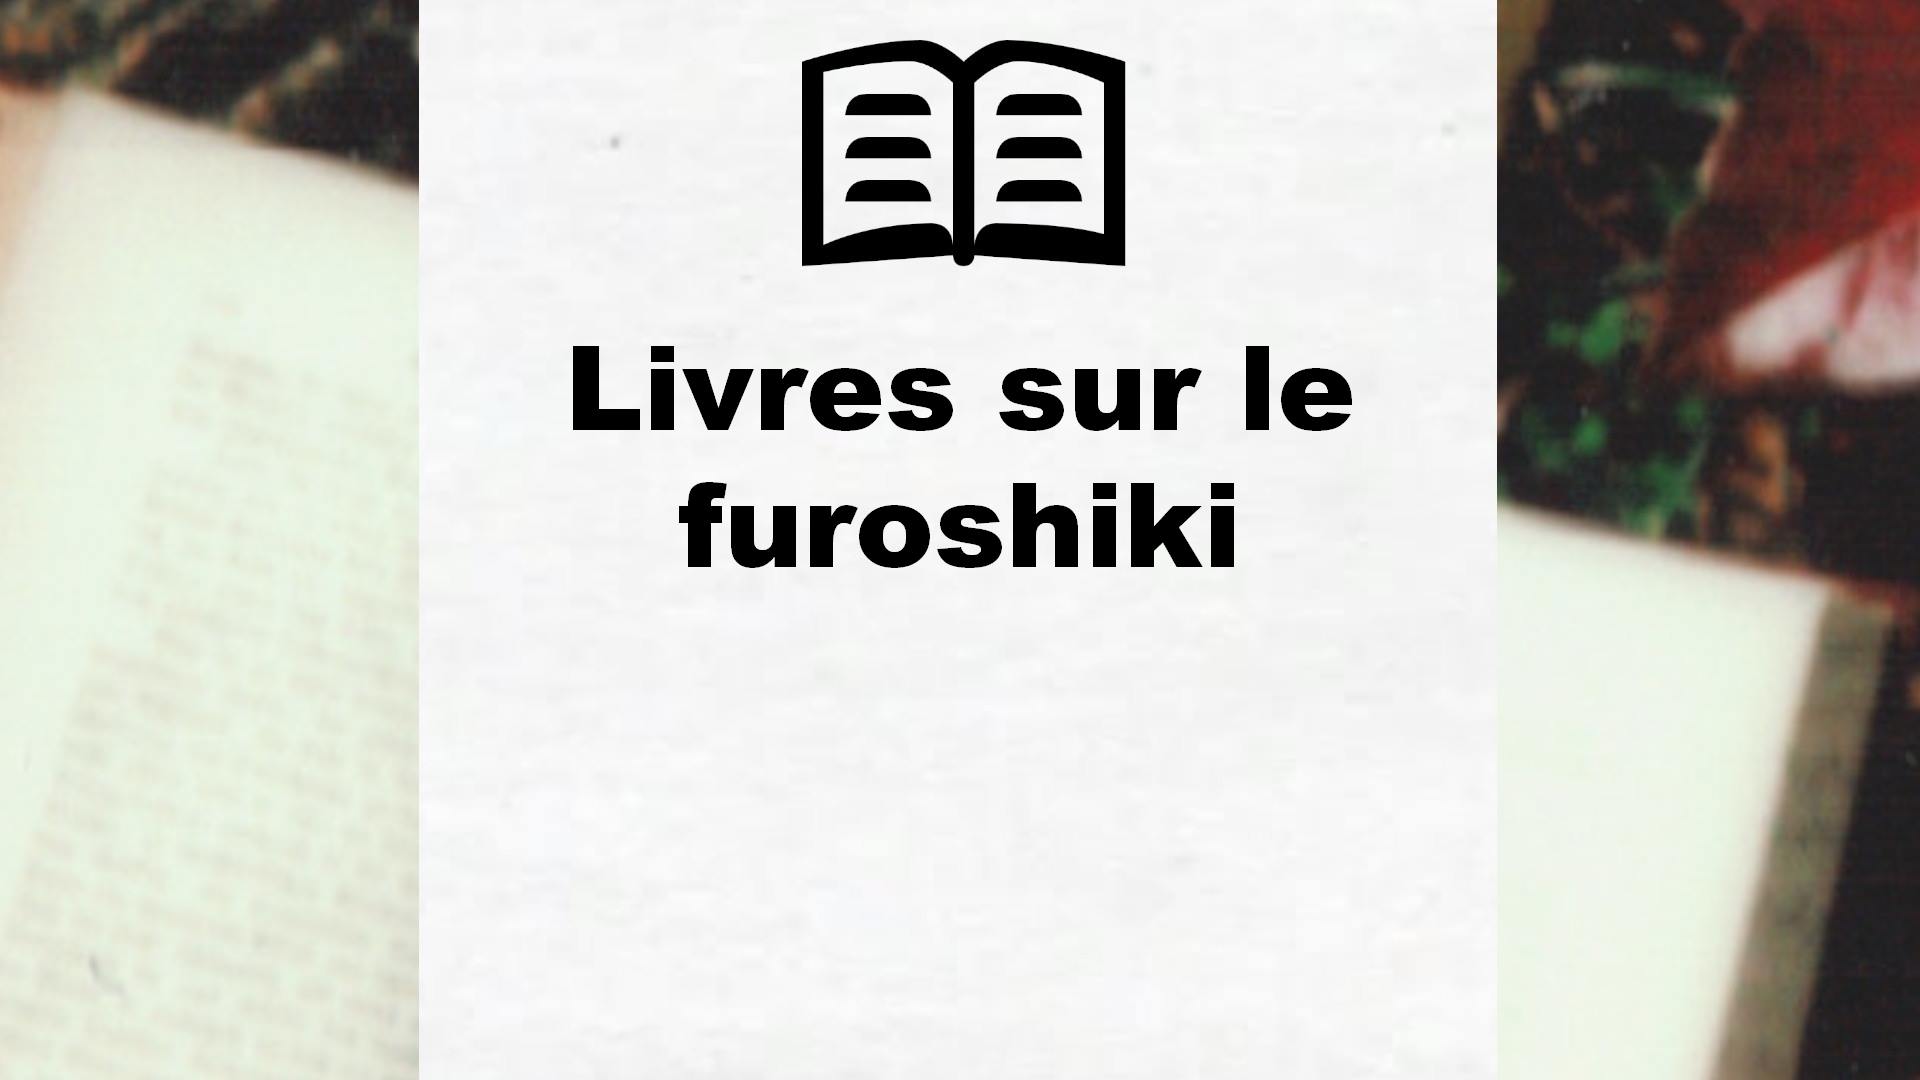 Livres sur le furoshiki